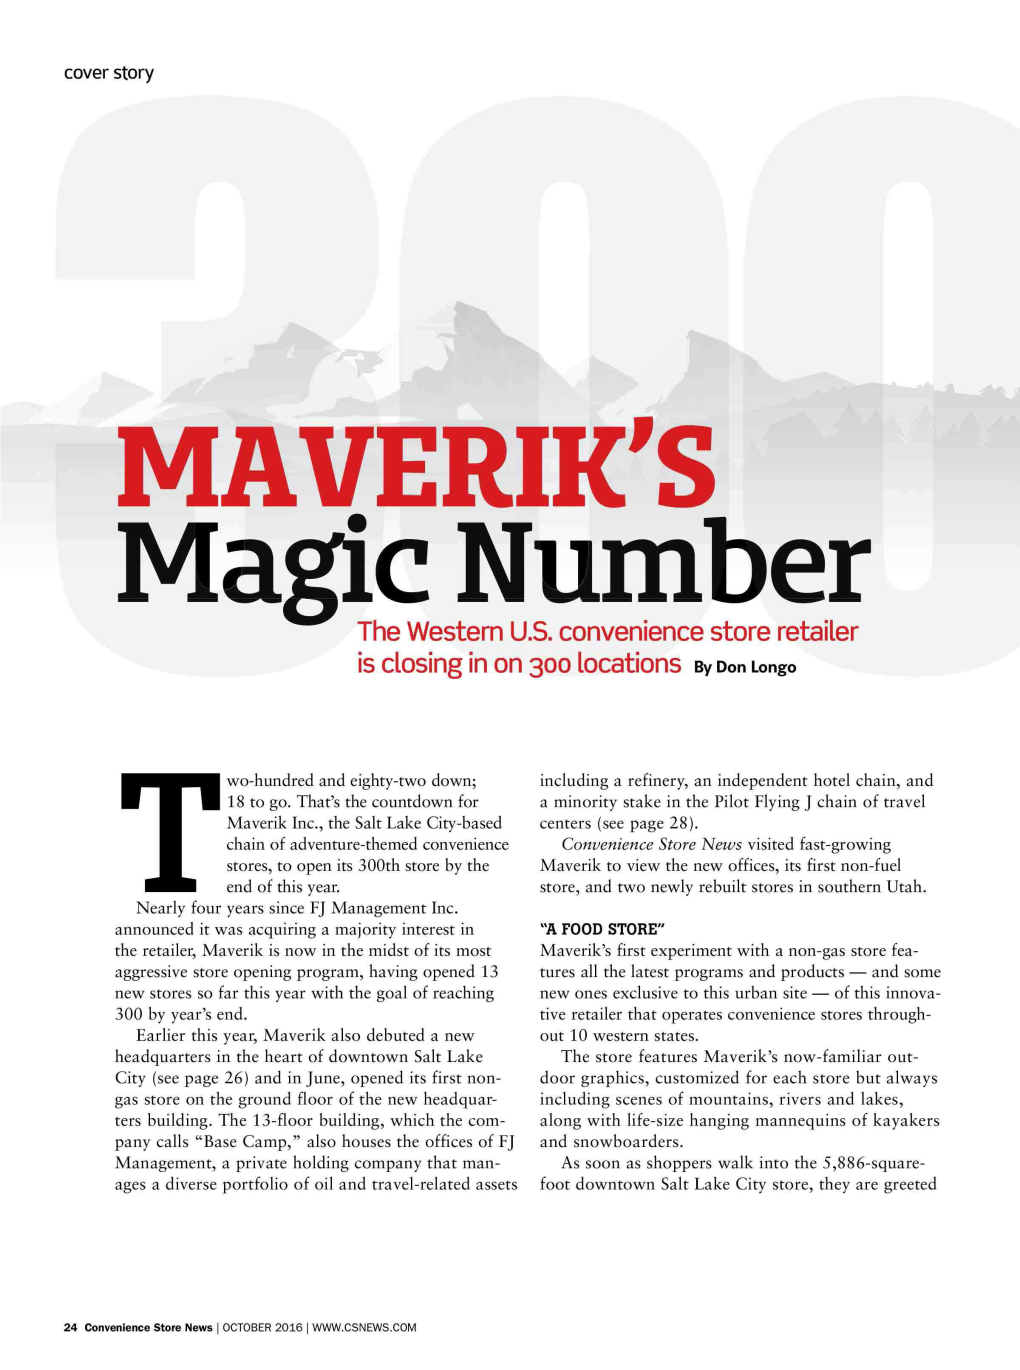 MAVERIK's Magic Number the Western U.S